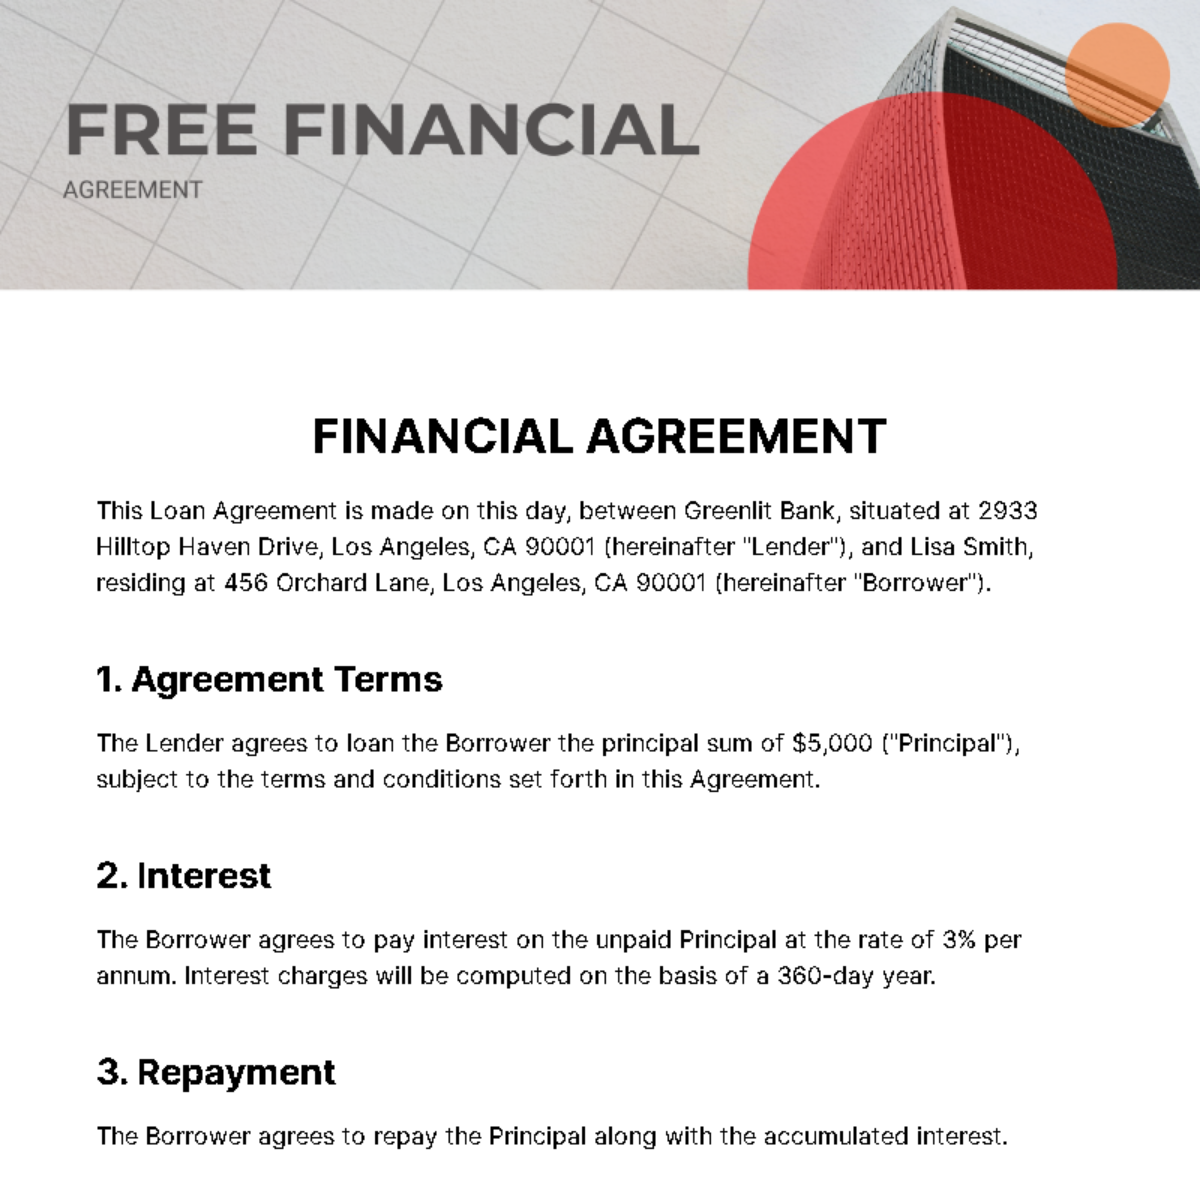 Financial Agreement Template